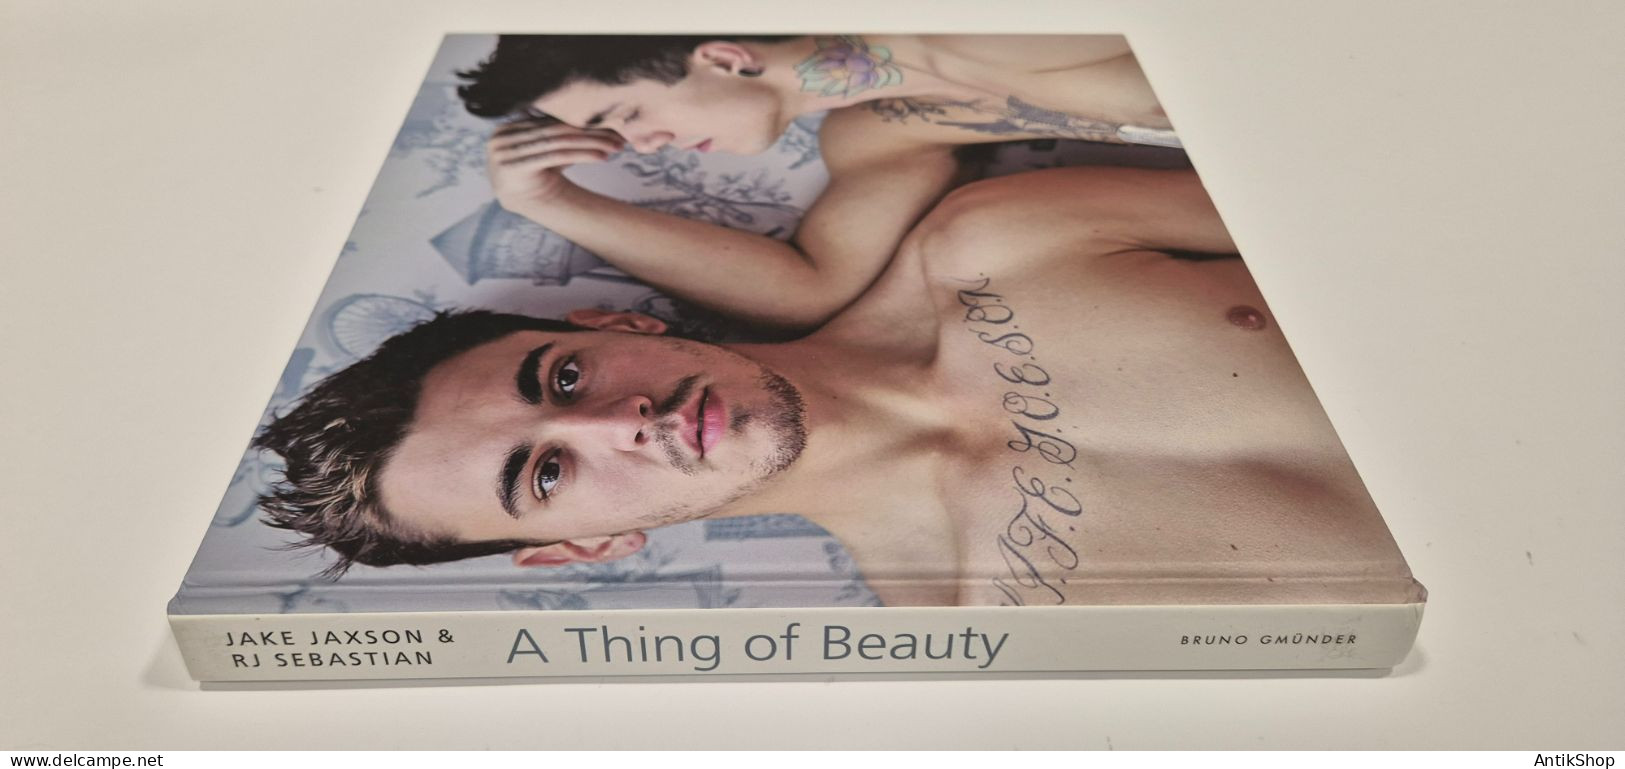 Jake Jackson & RJ Sebastian - A Thing Of Beauty - 2014 New Gay Sex Erotik - Schone Kunsten